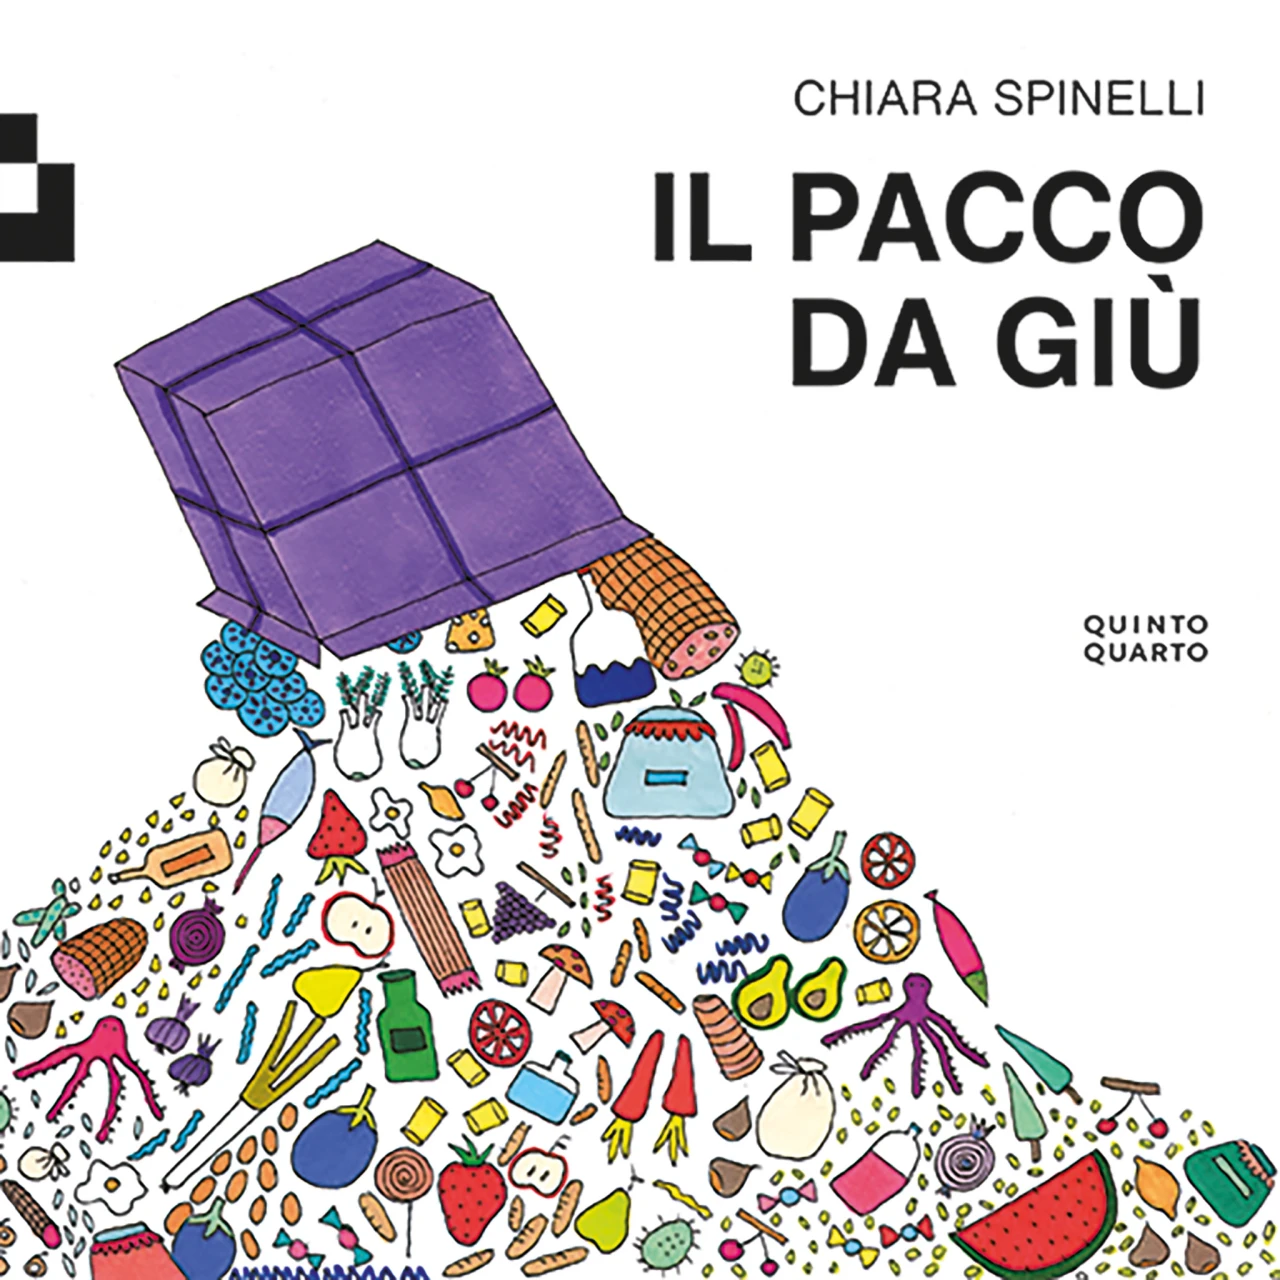 015-Chiara-Spinelli-Opera.jpg